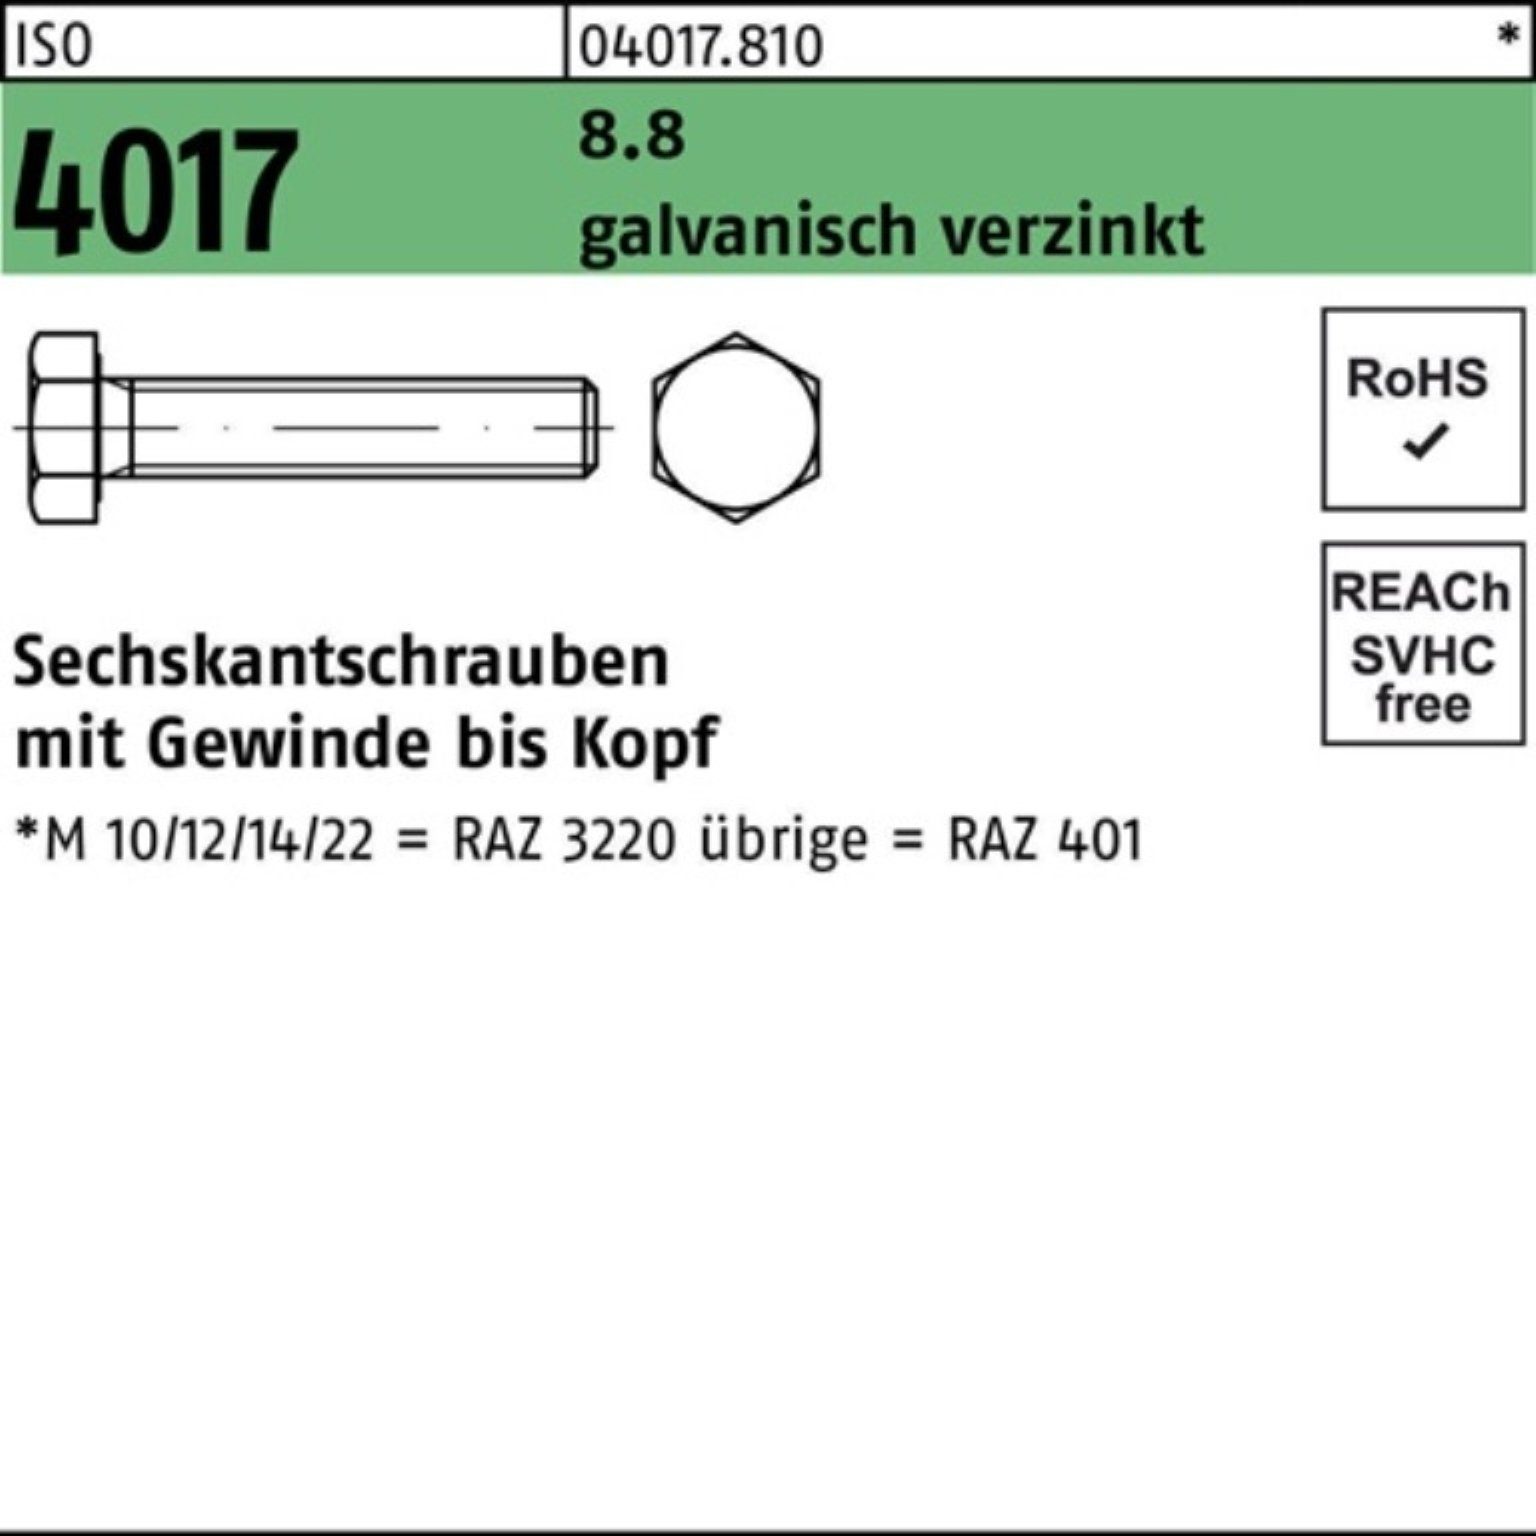 Bufab Sechskantschraube 500er 20 galv.verz. Pack 4017 Sechskantschraube 500 ISO VG St 8.8 M7x